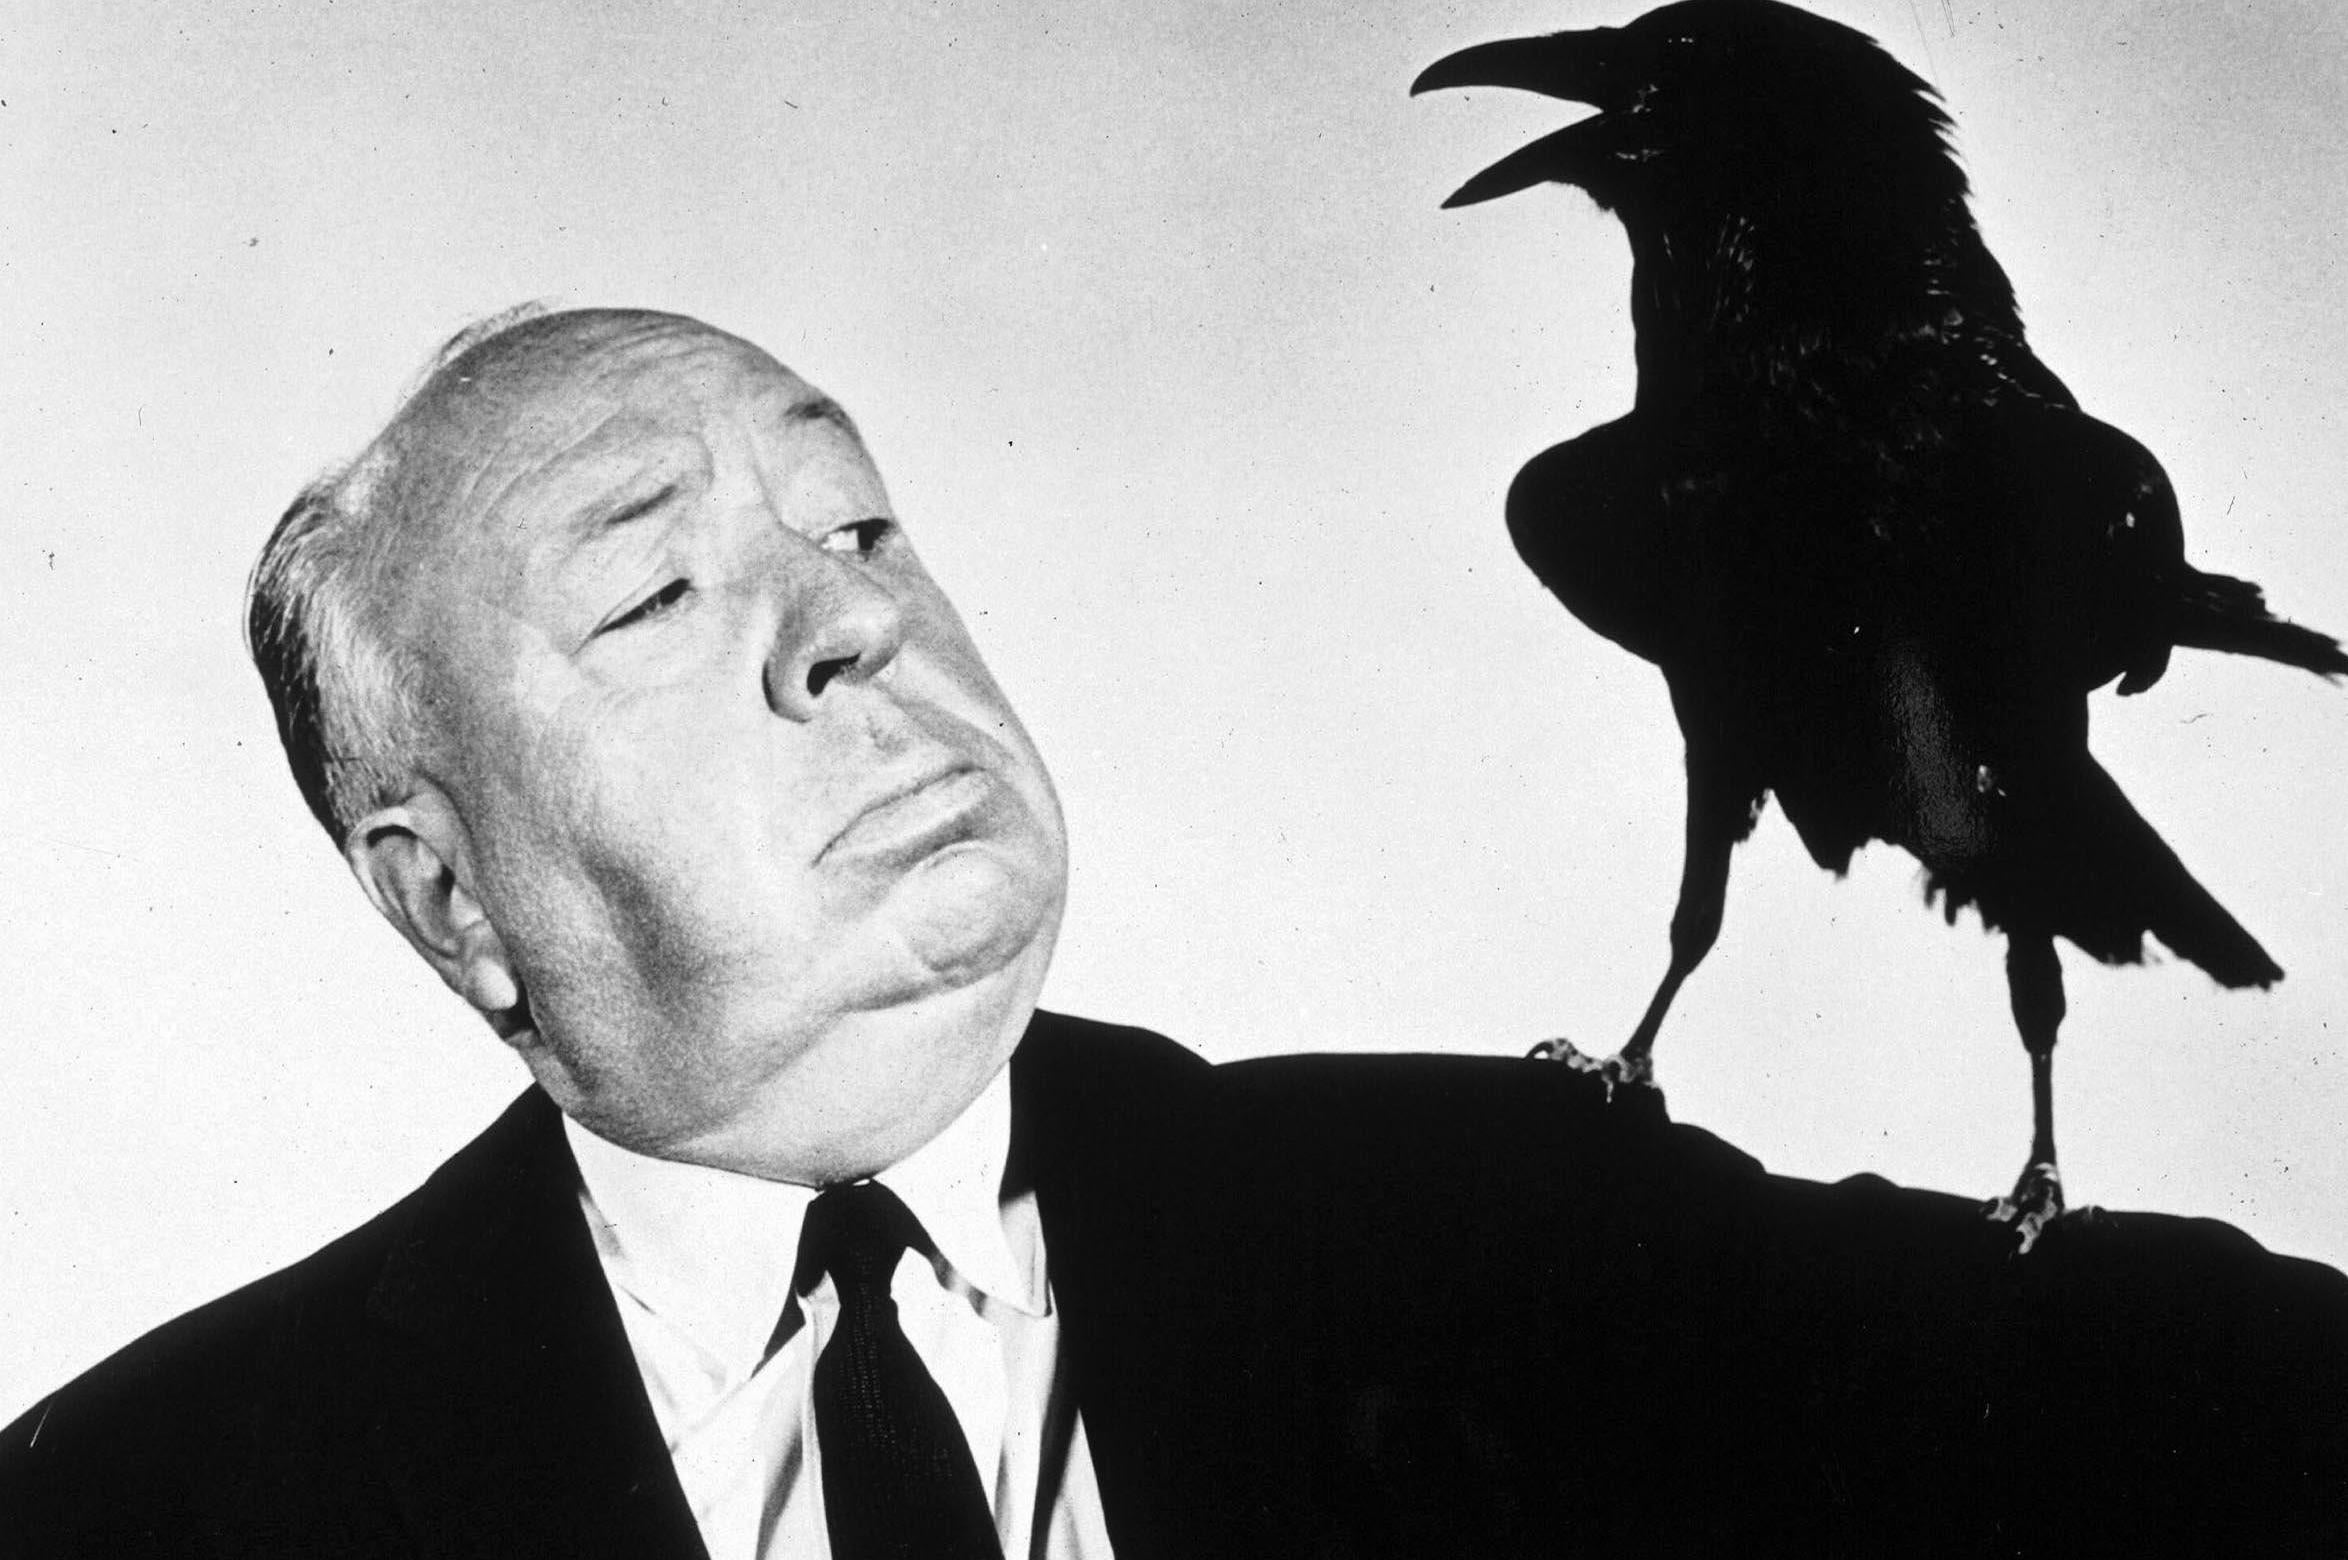 Hitchcock promoting his film ‘The Birds’